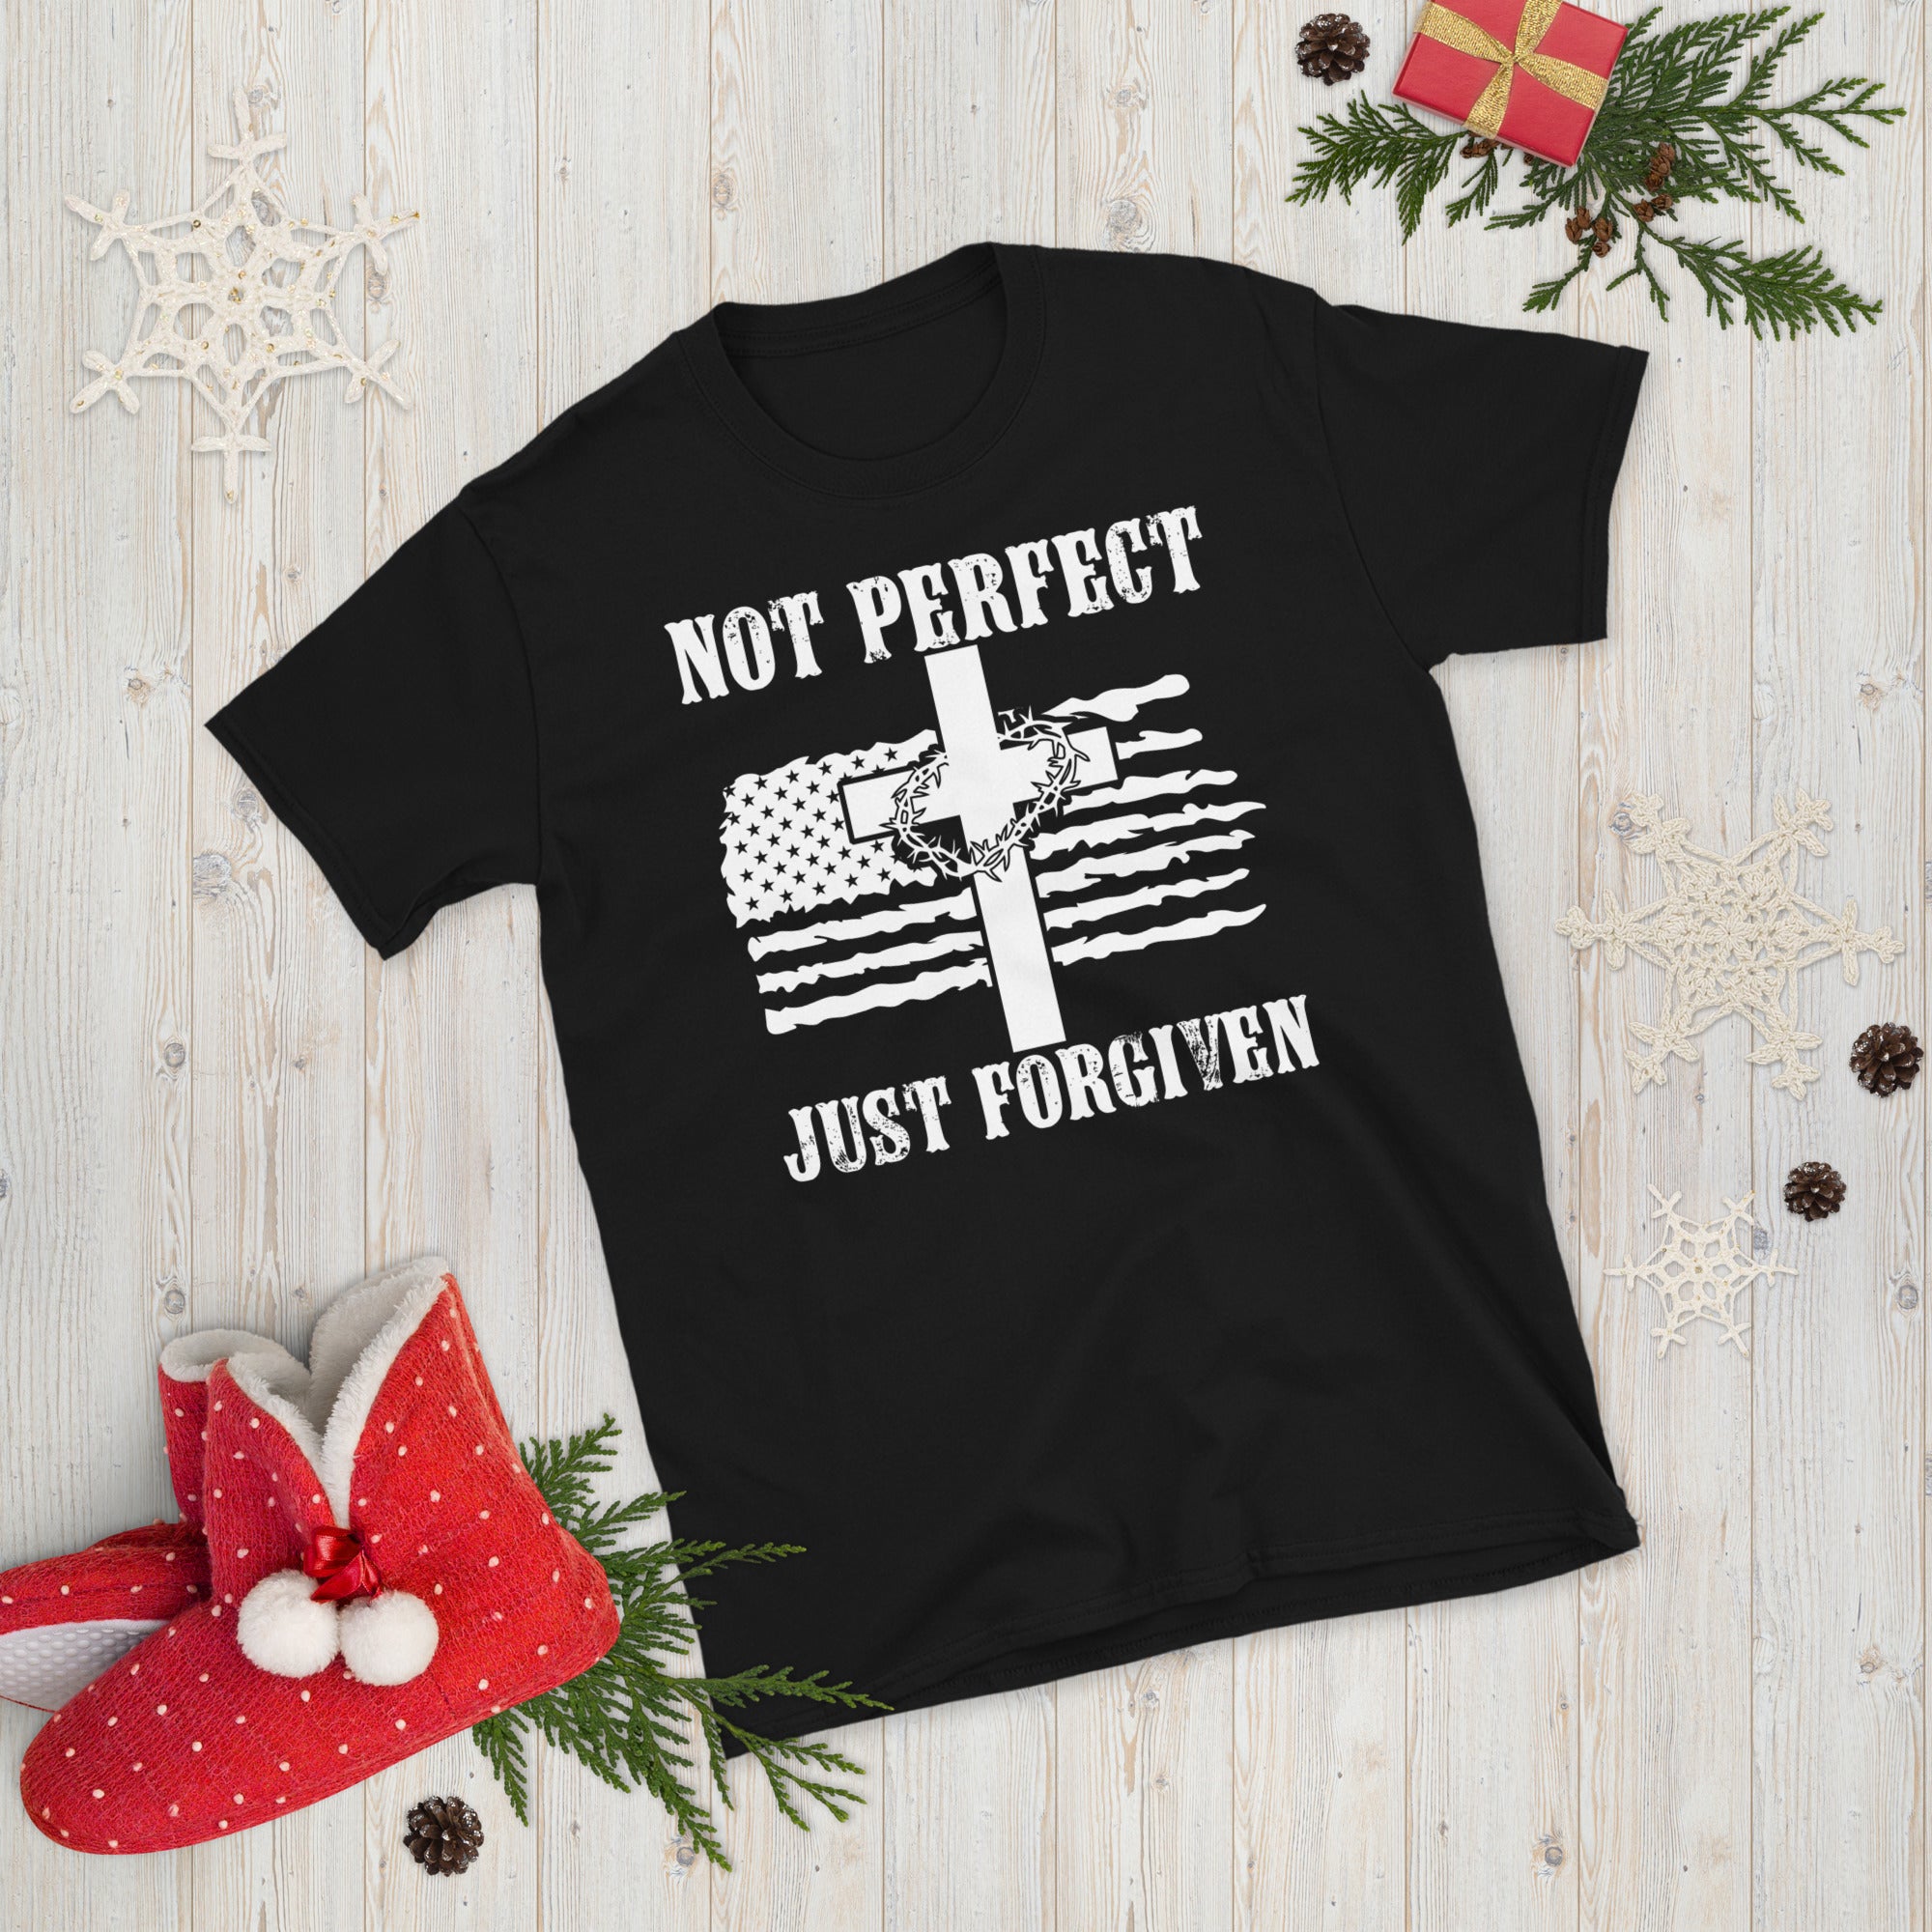 Not Perfect Just Forgiven Shirt, Christian Shirt, Religious Gifts For Men, Bible Verse Tshirt, Religious Gifts, Holy Bible T Shirt - Madeinsea©